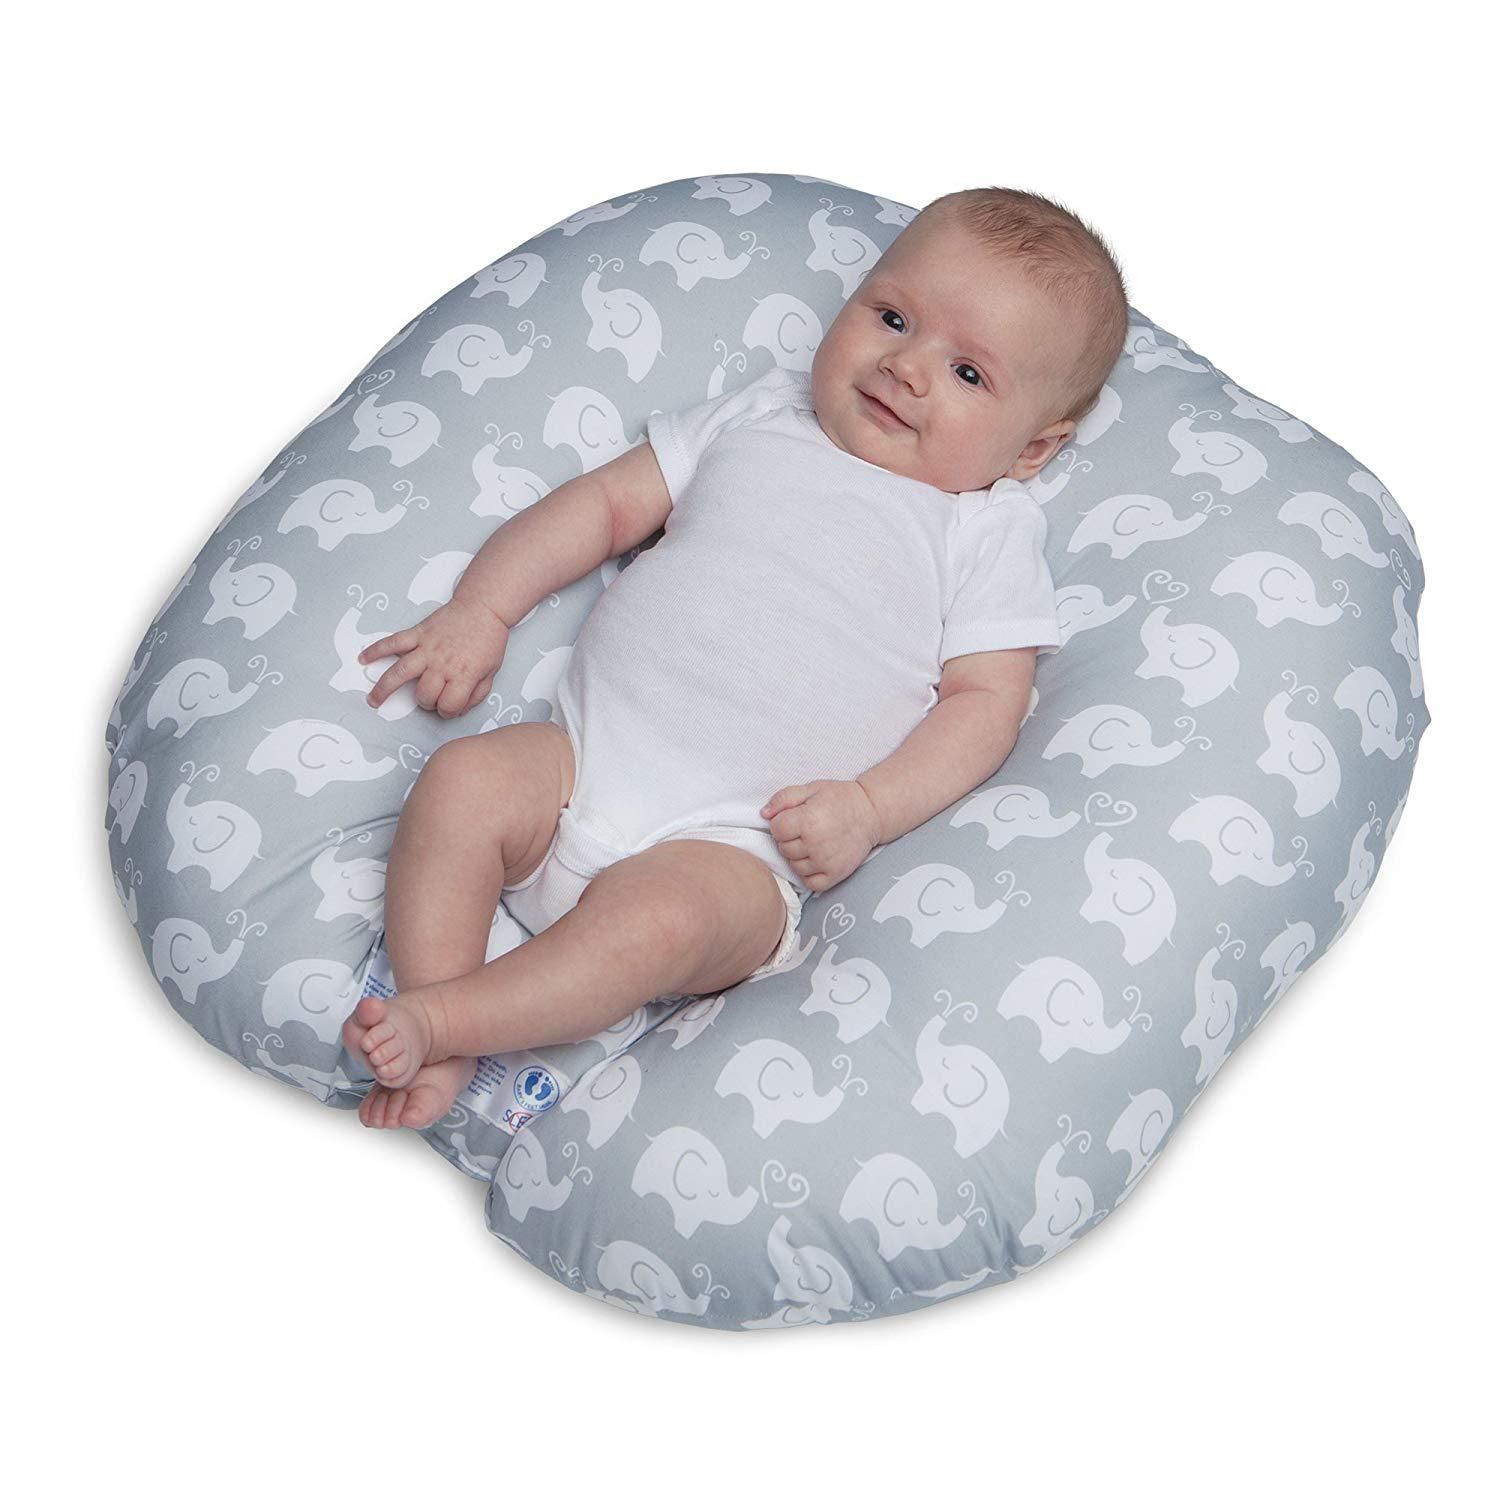 TS 超厚超柔软婴儿躺椅便携式 婴儿床上睡垫婴儿床中床